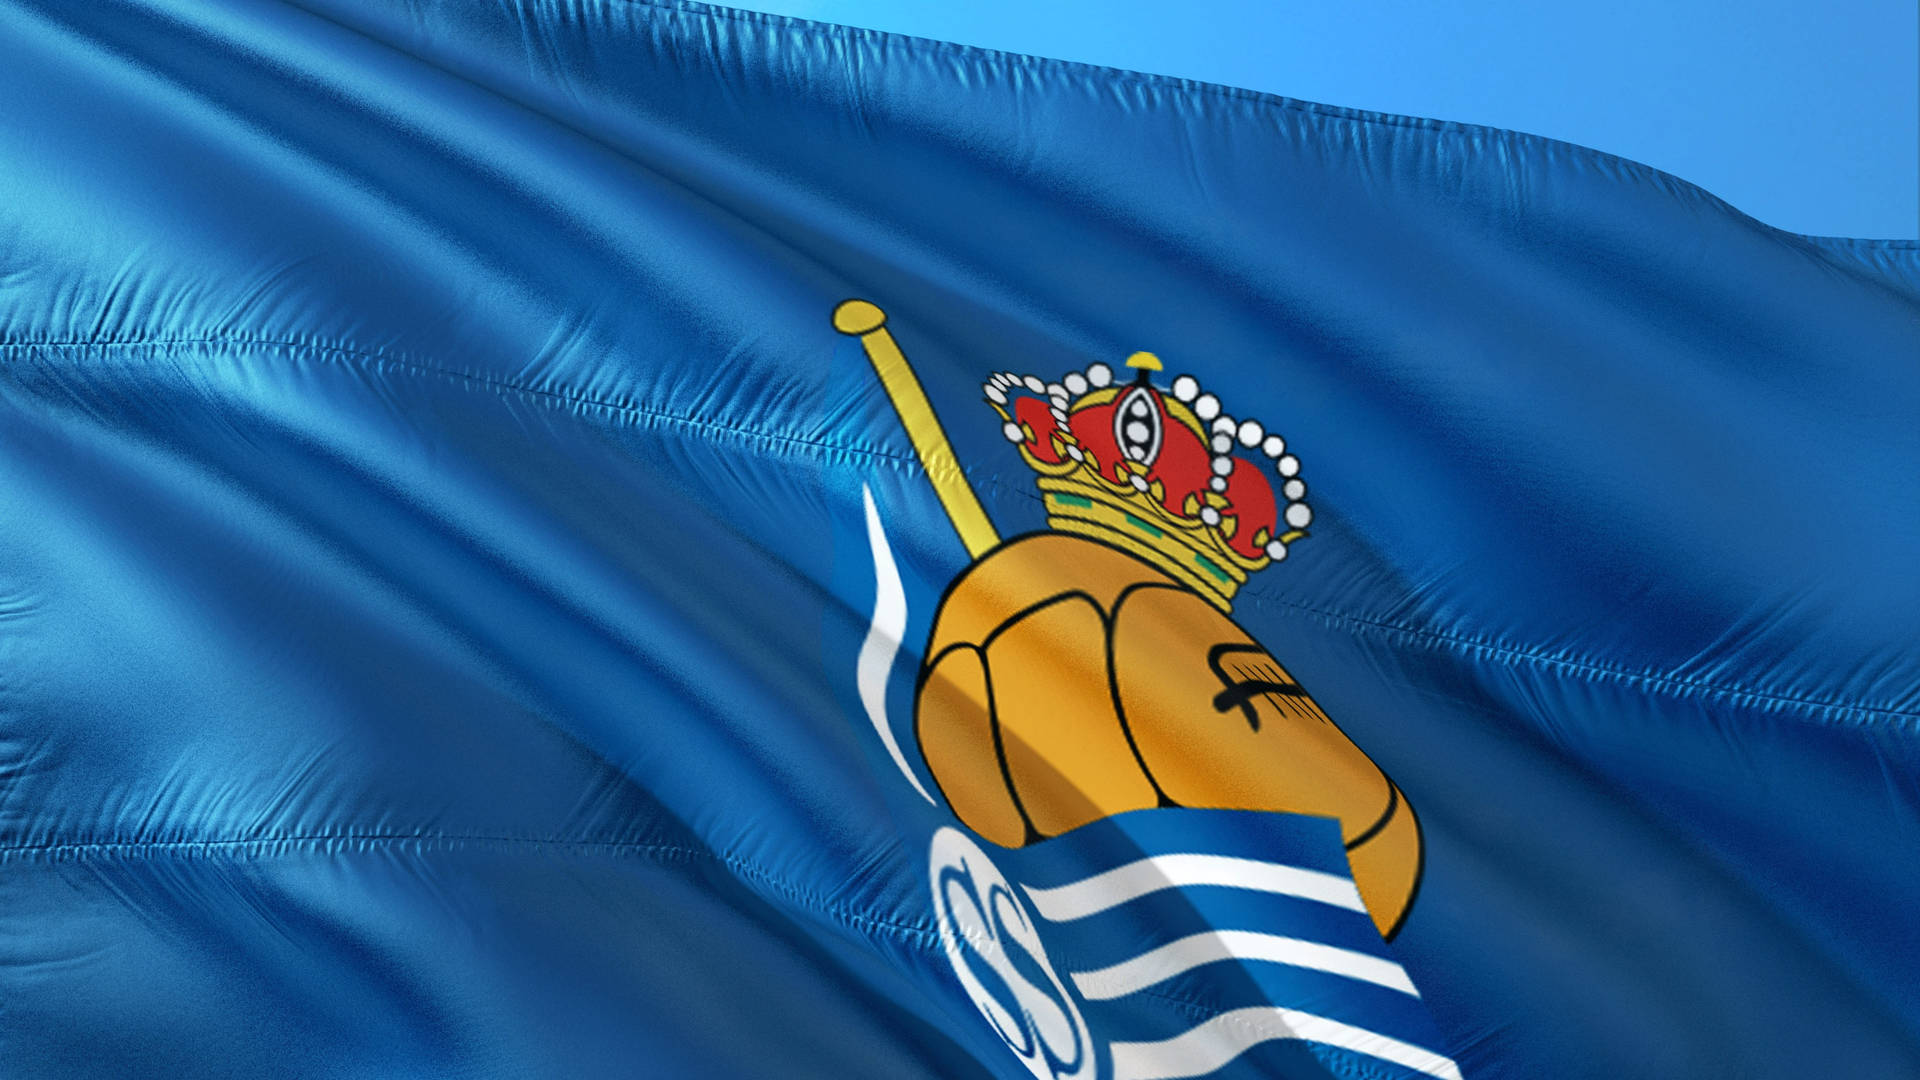 Laliga Real Sociedad Is A Professional Football Team Based In The City Of San Sebastián, Spain. Fondo de pantalla